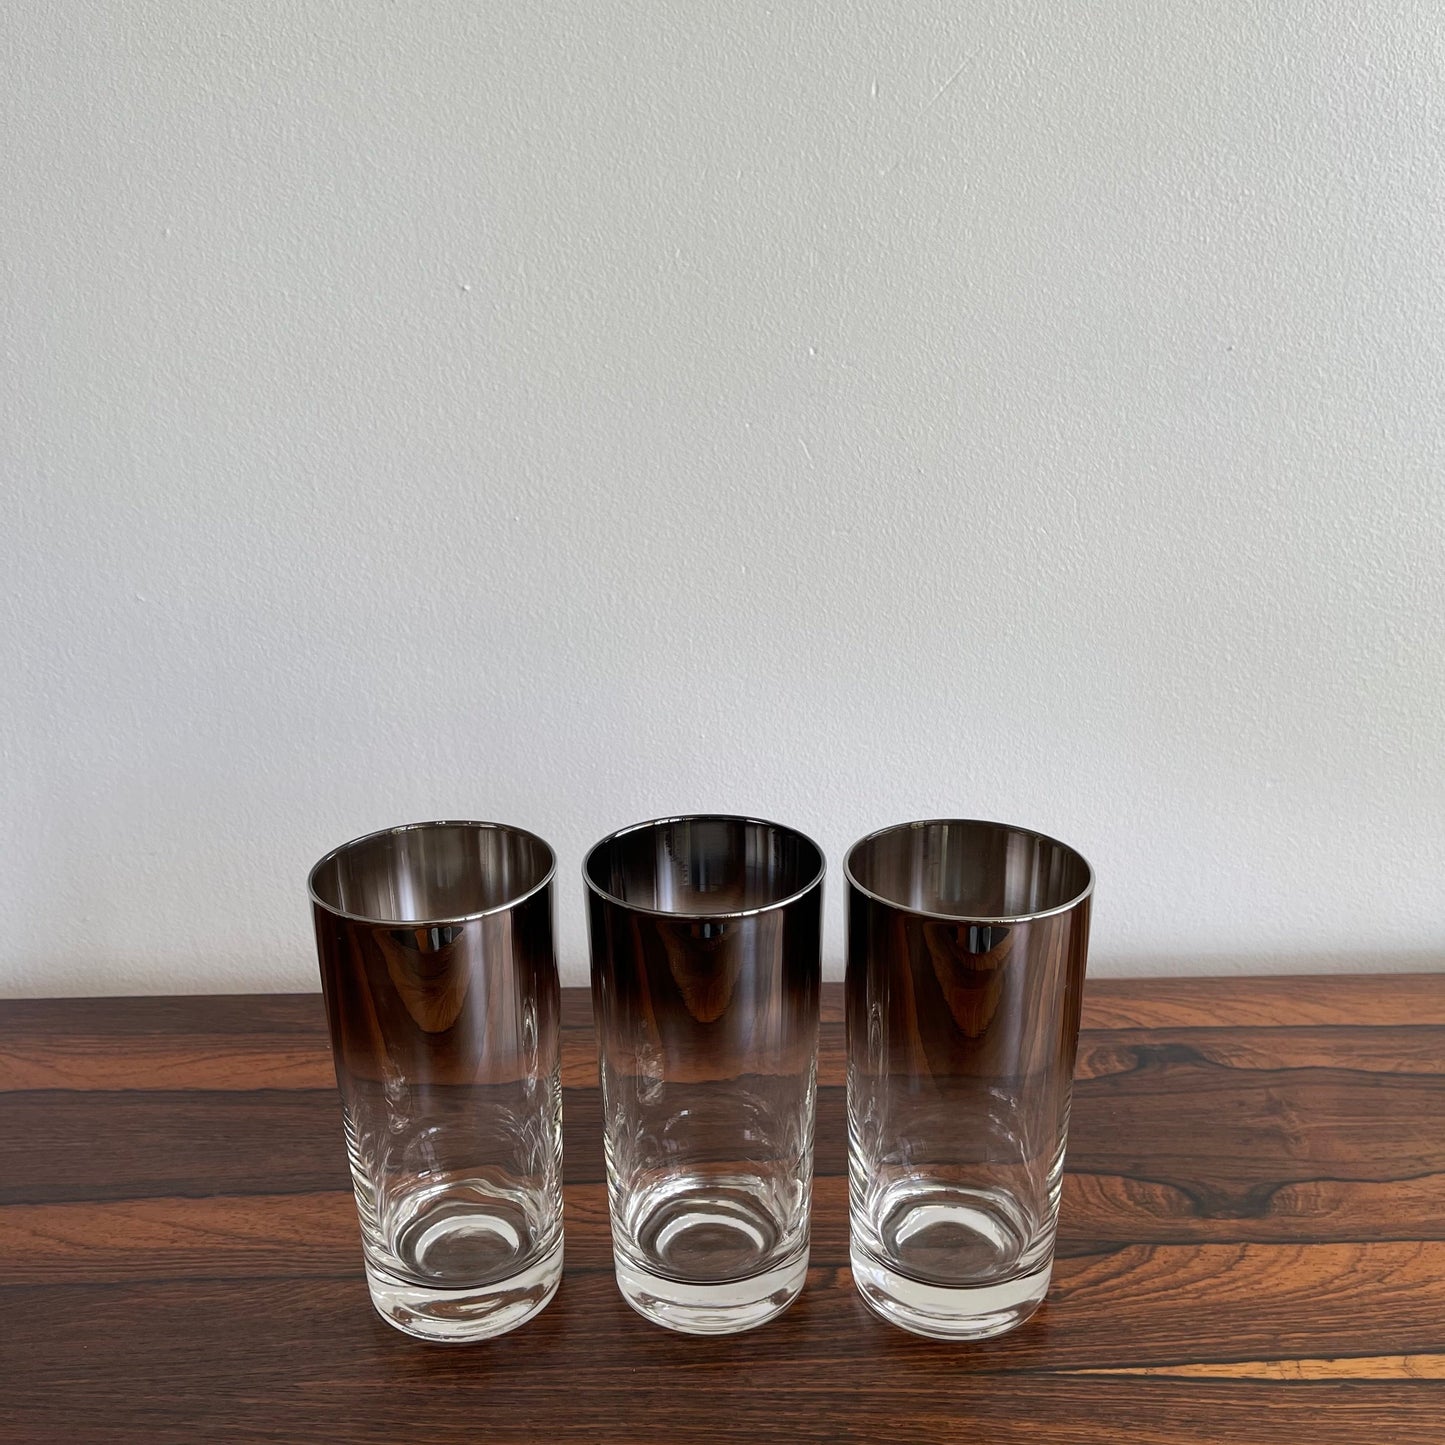 Set of 3 Vintage Silver Fade Glasses